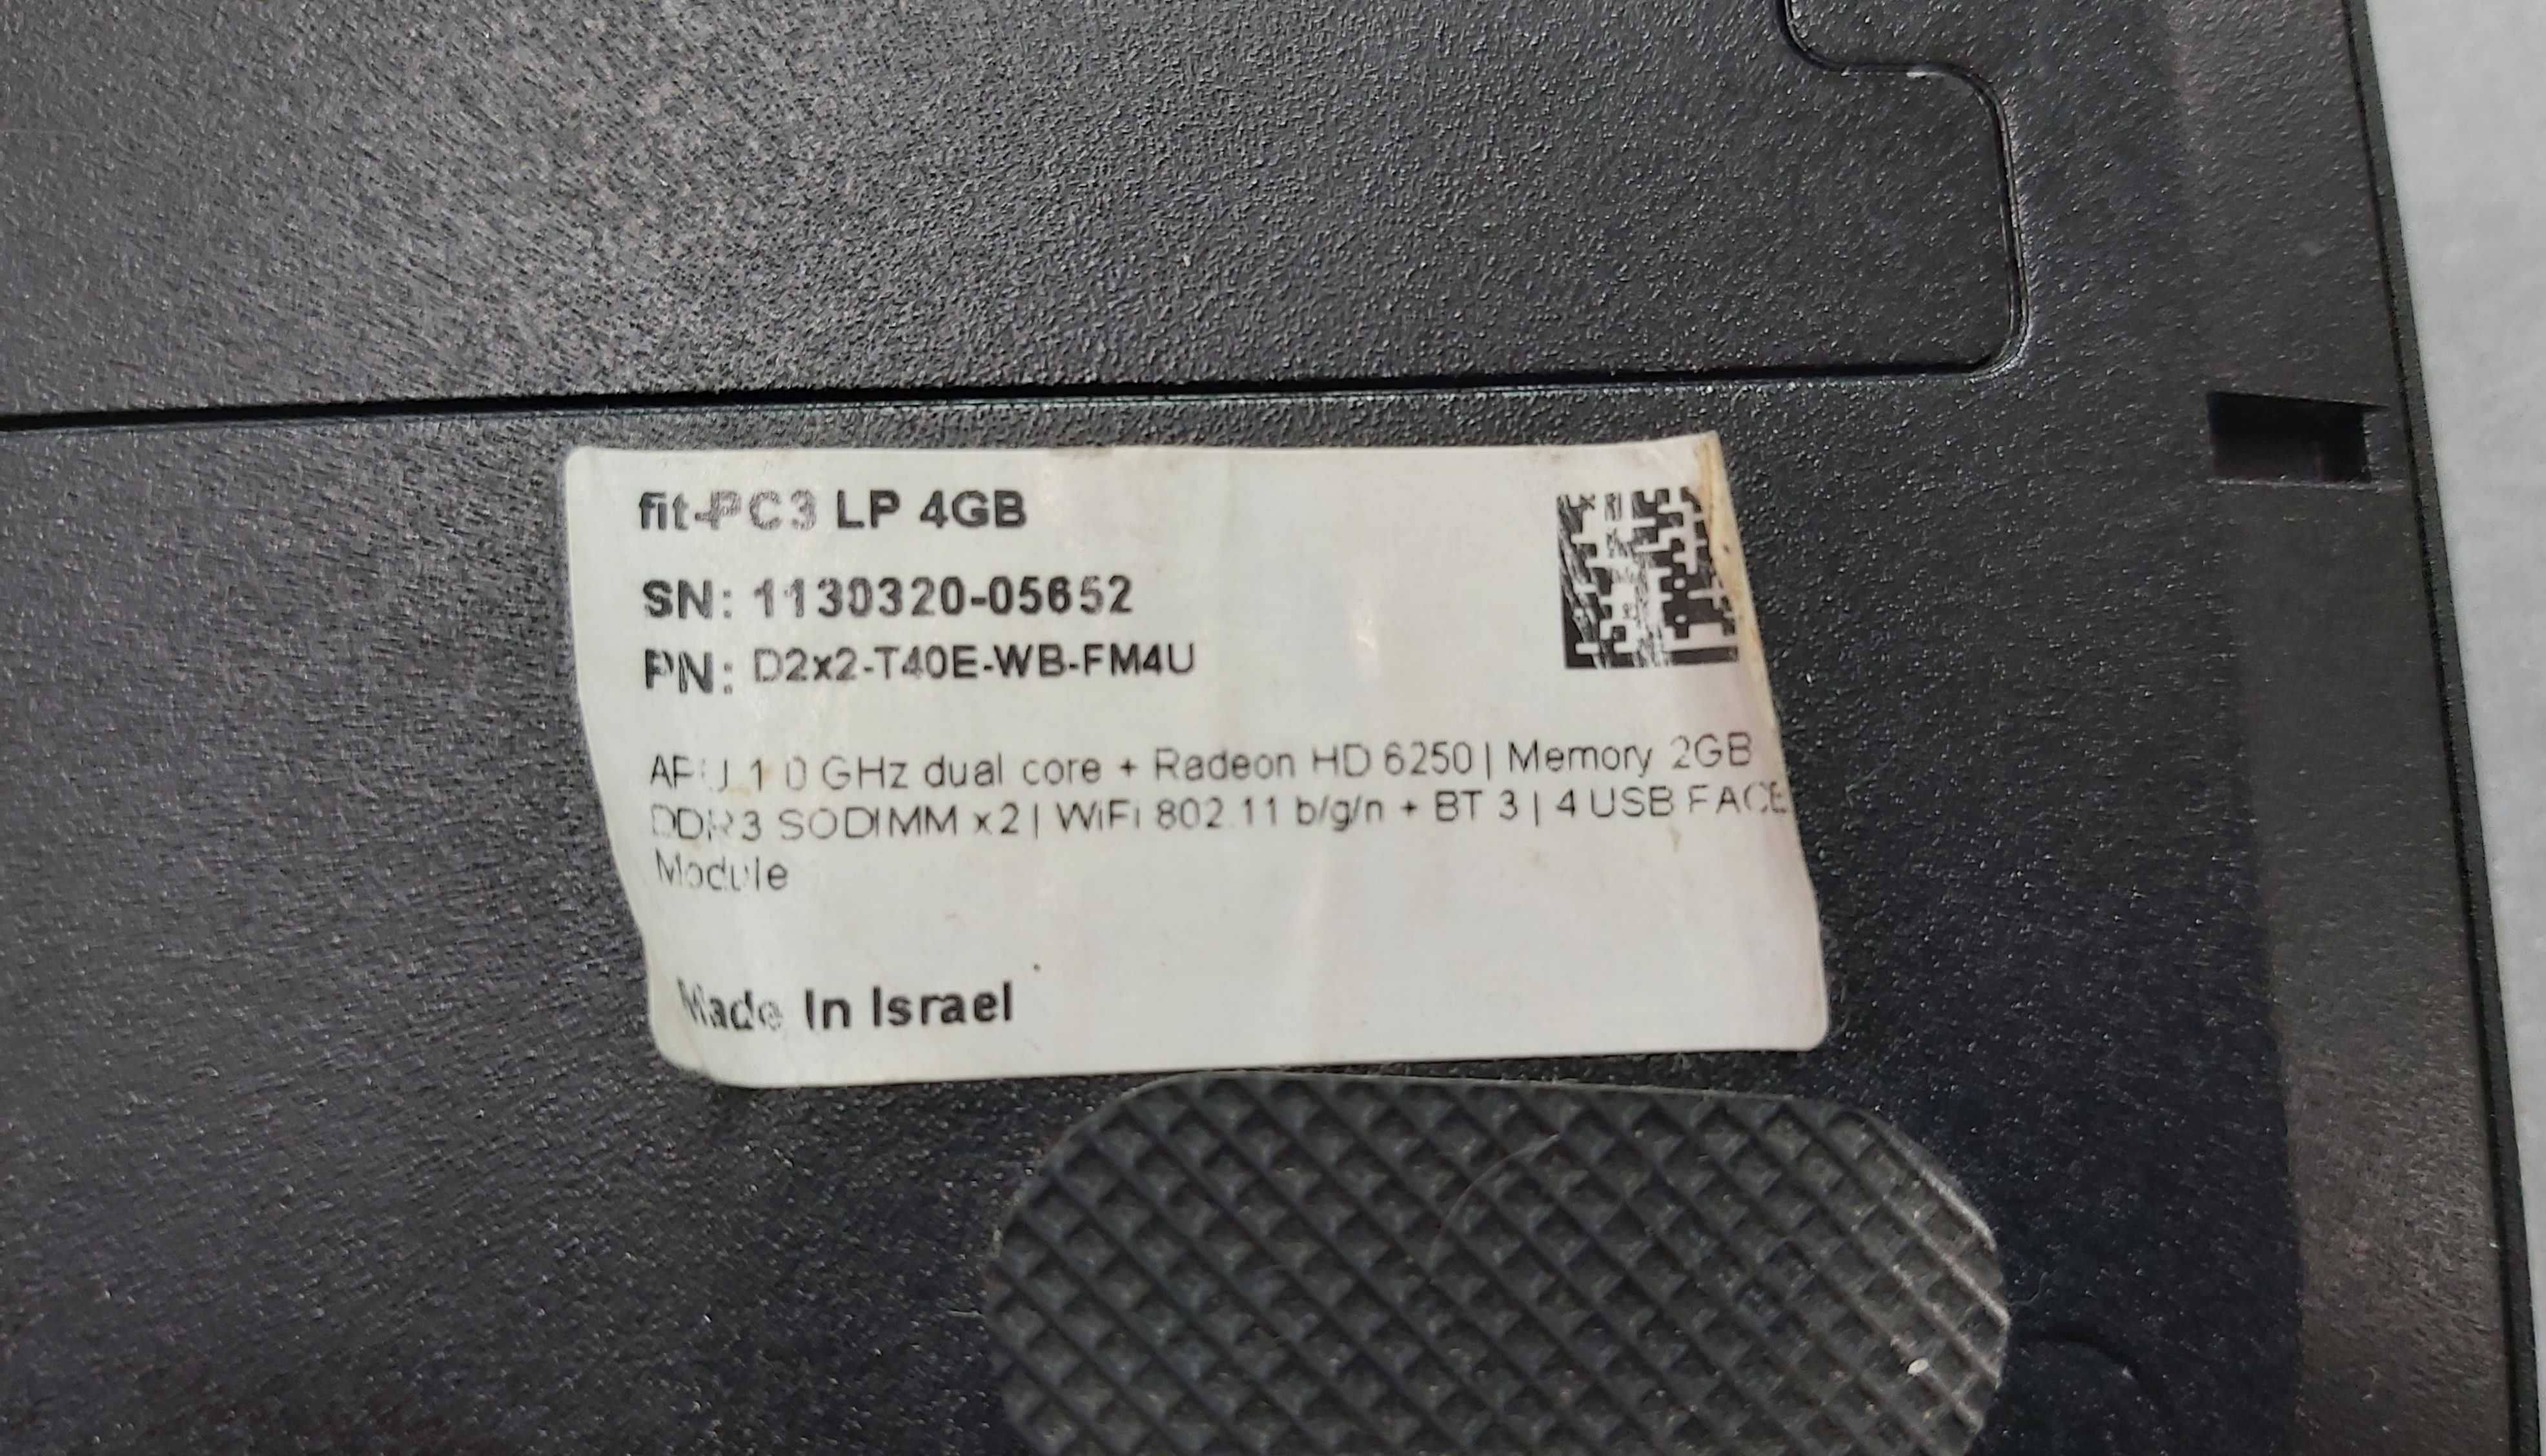 мини-системный блок fit-PC3 LP 4GB (Made In Israel)